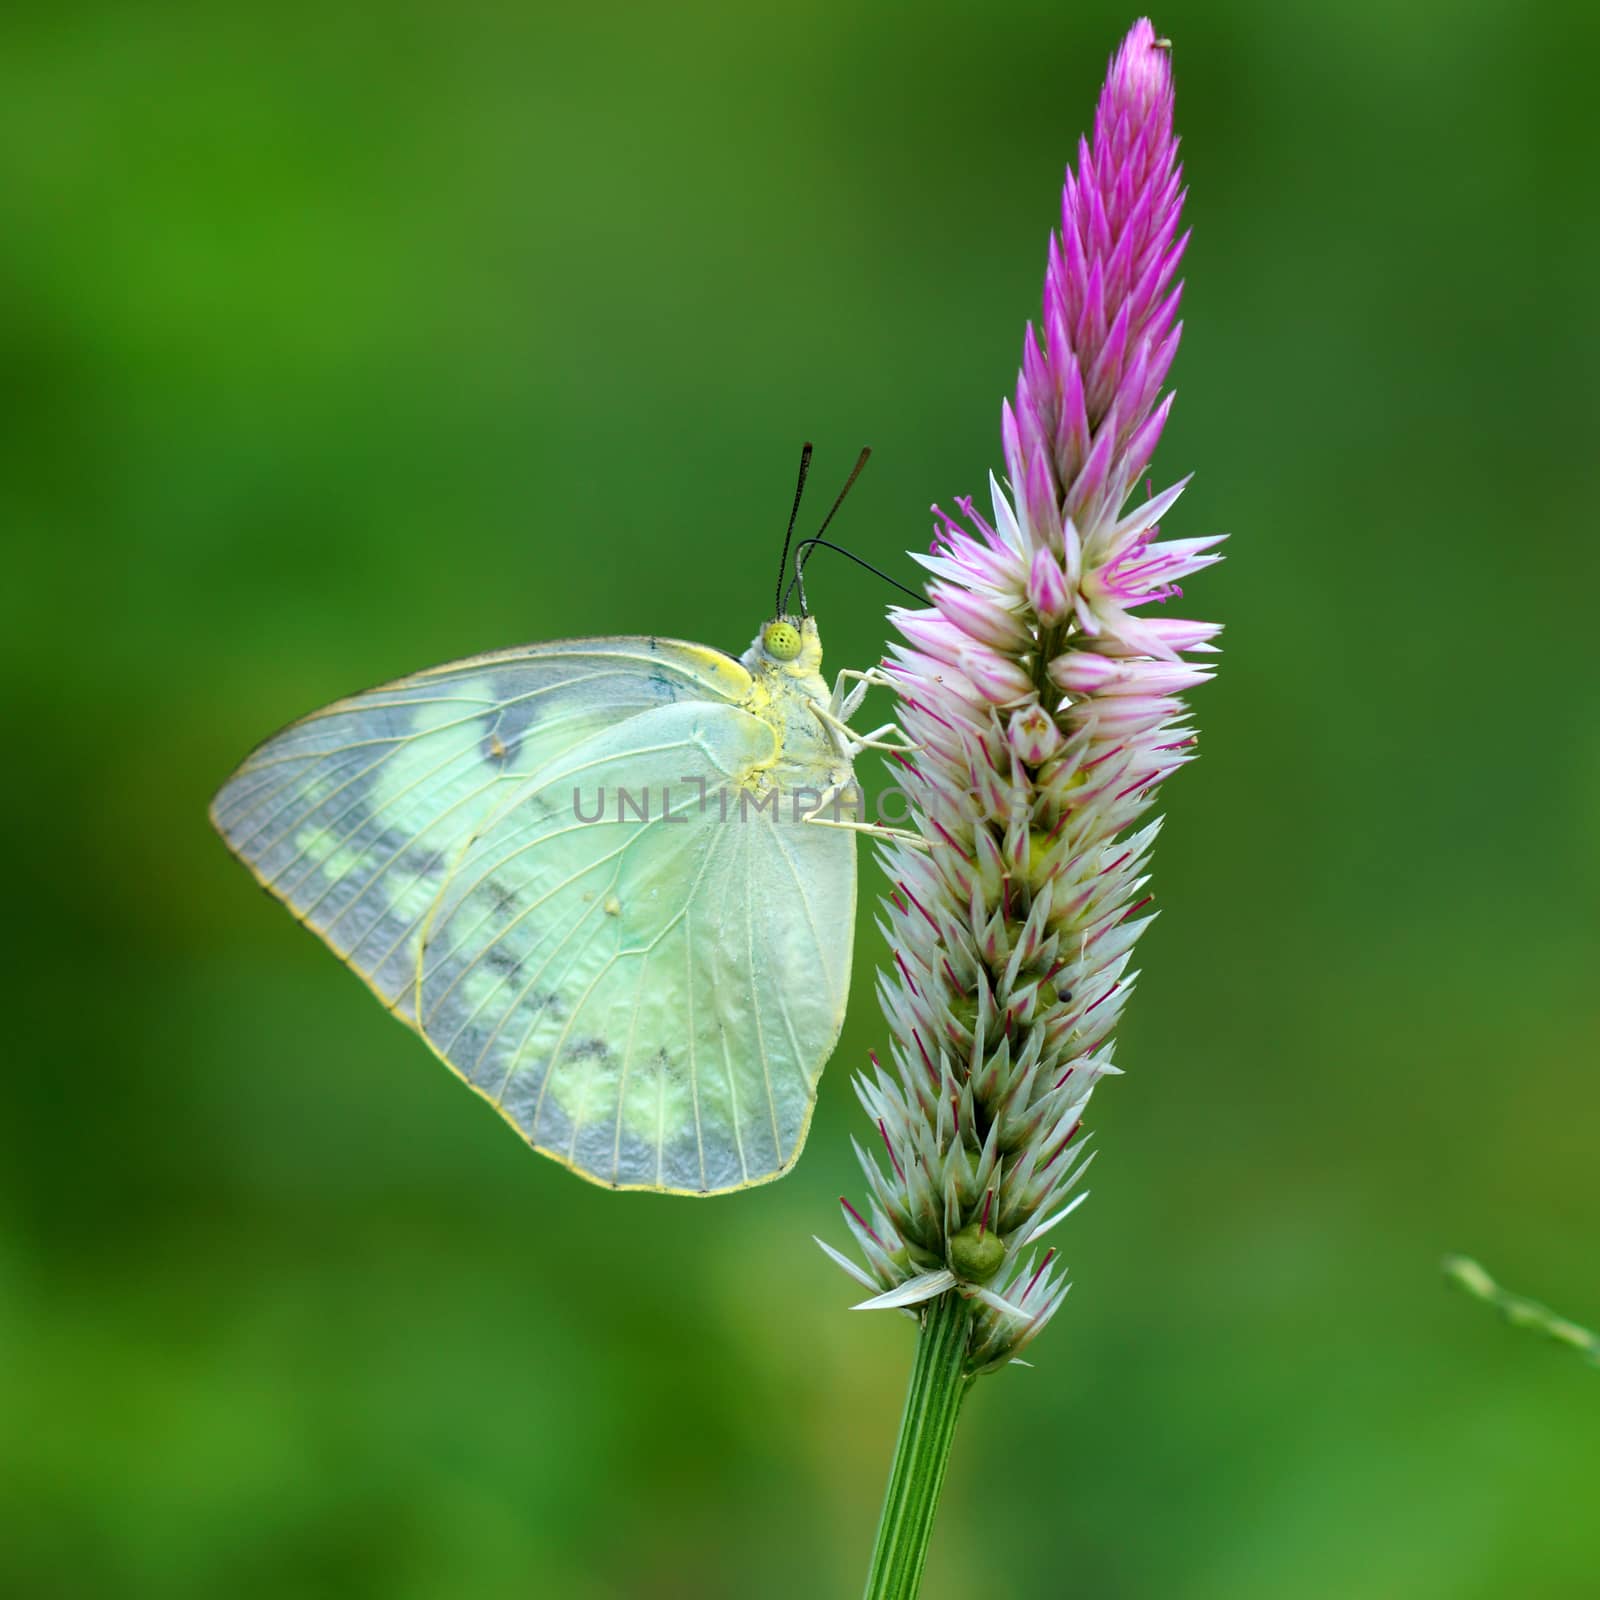 Butterfly on a flower.